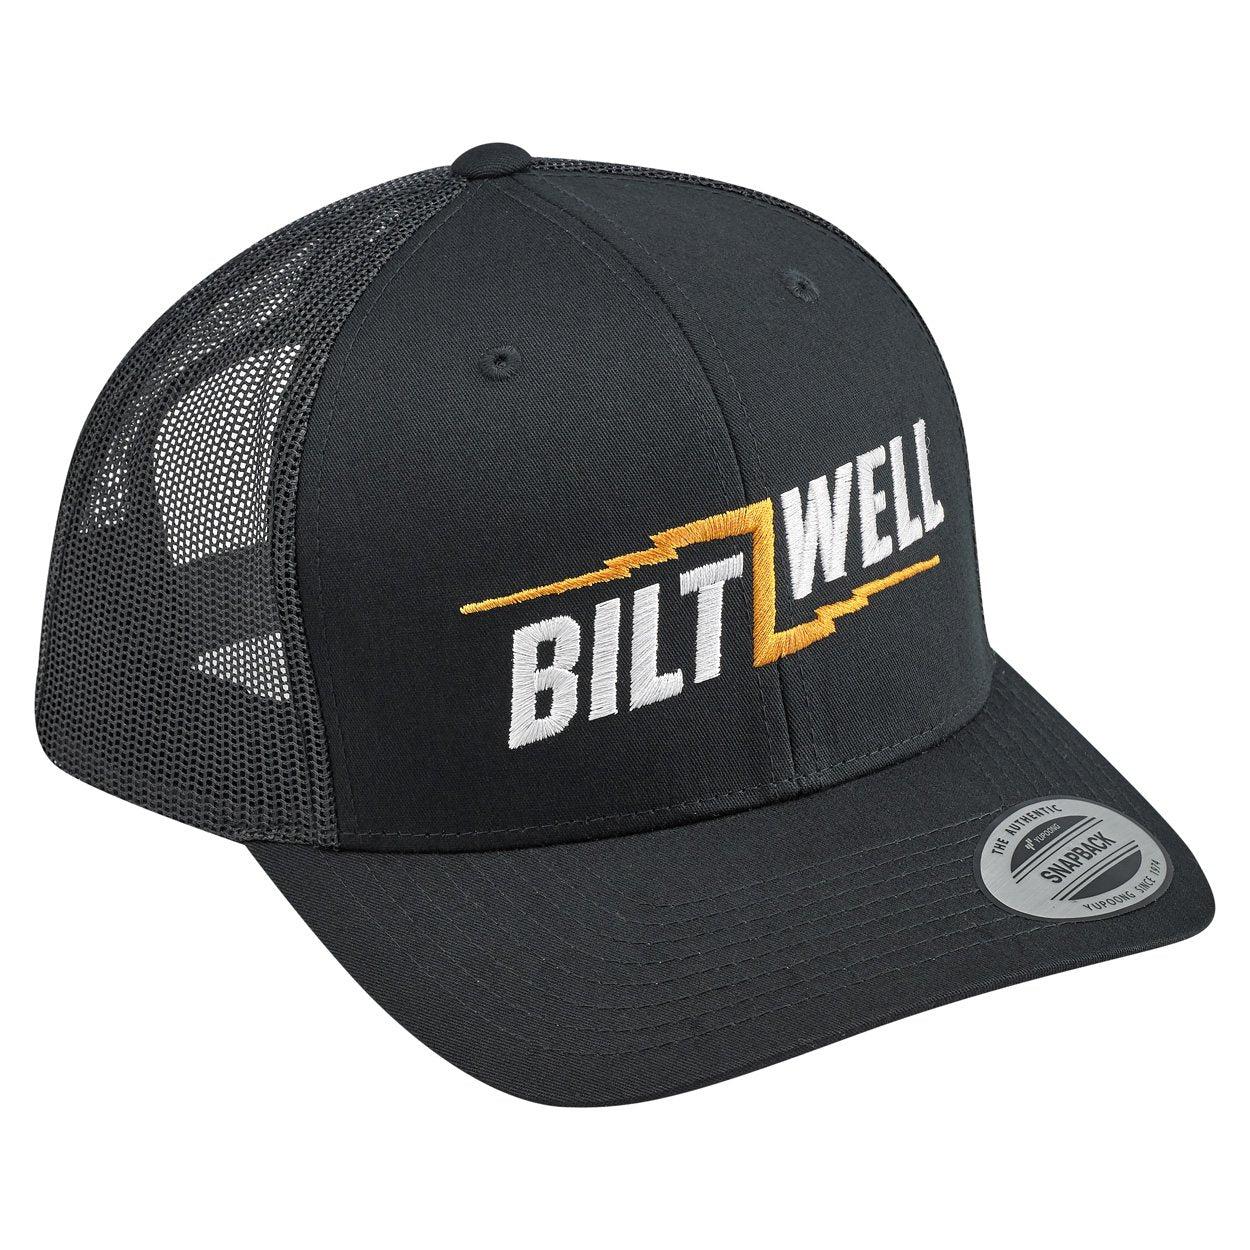 Biltwell Bolts 2 Trucker Cap - Black